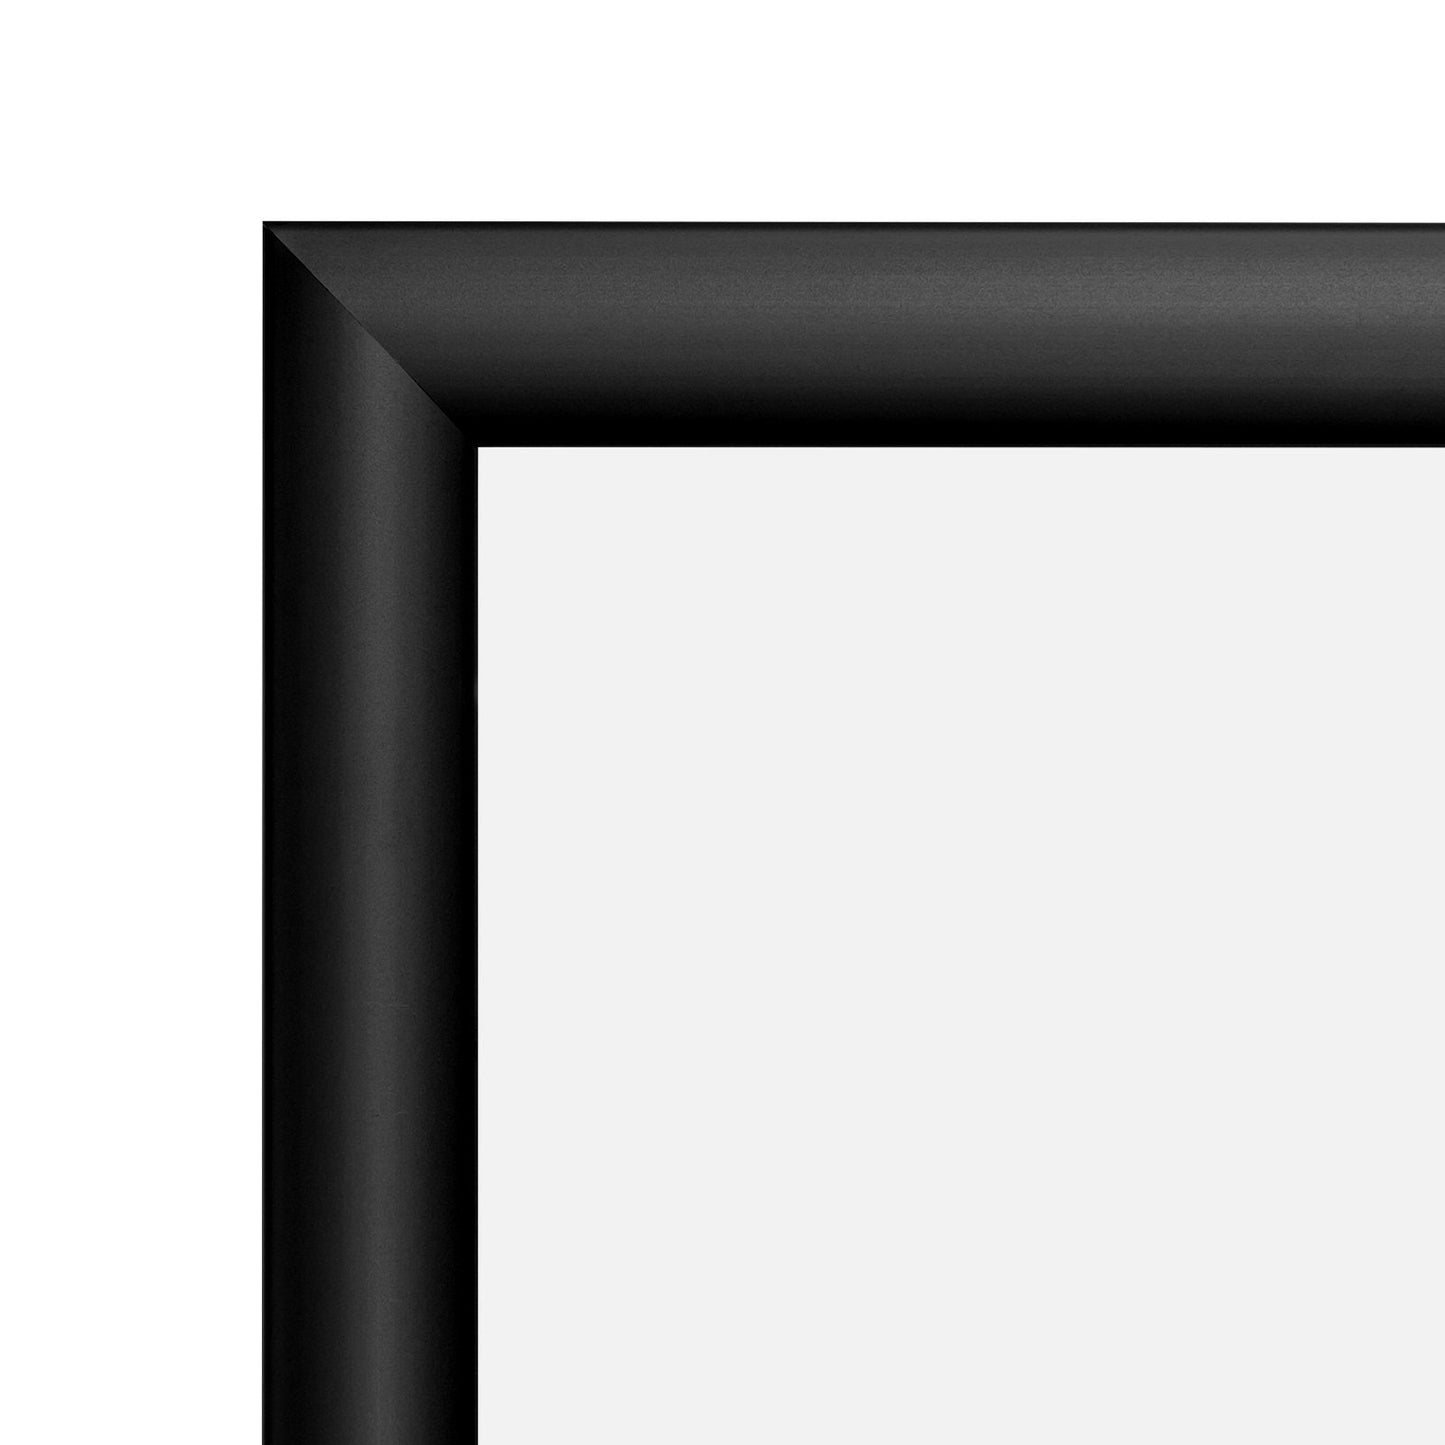 10x24 Black SnapeZo® Return Snap Frame - 1.2" Profile - Snap Frames Direct